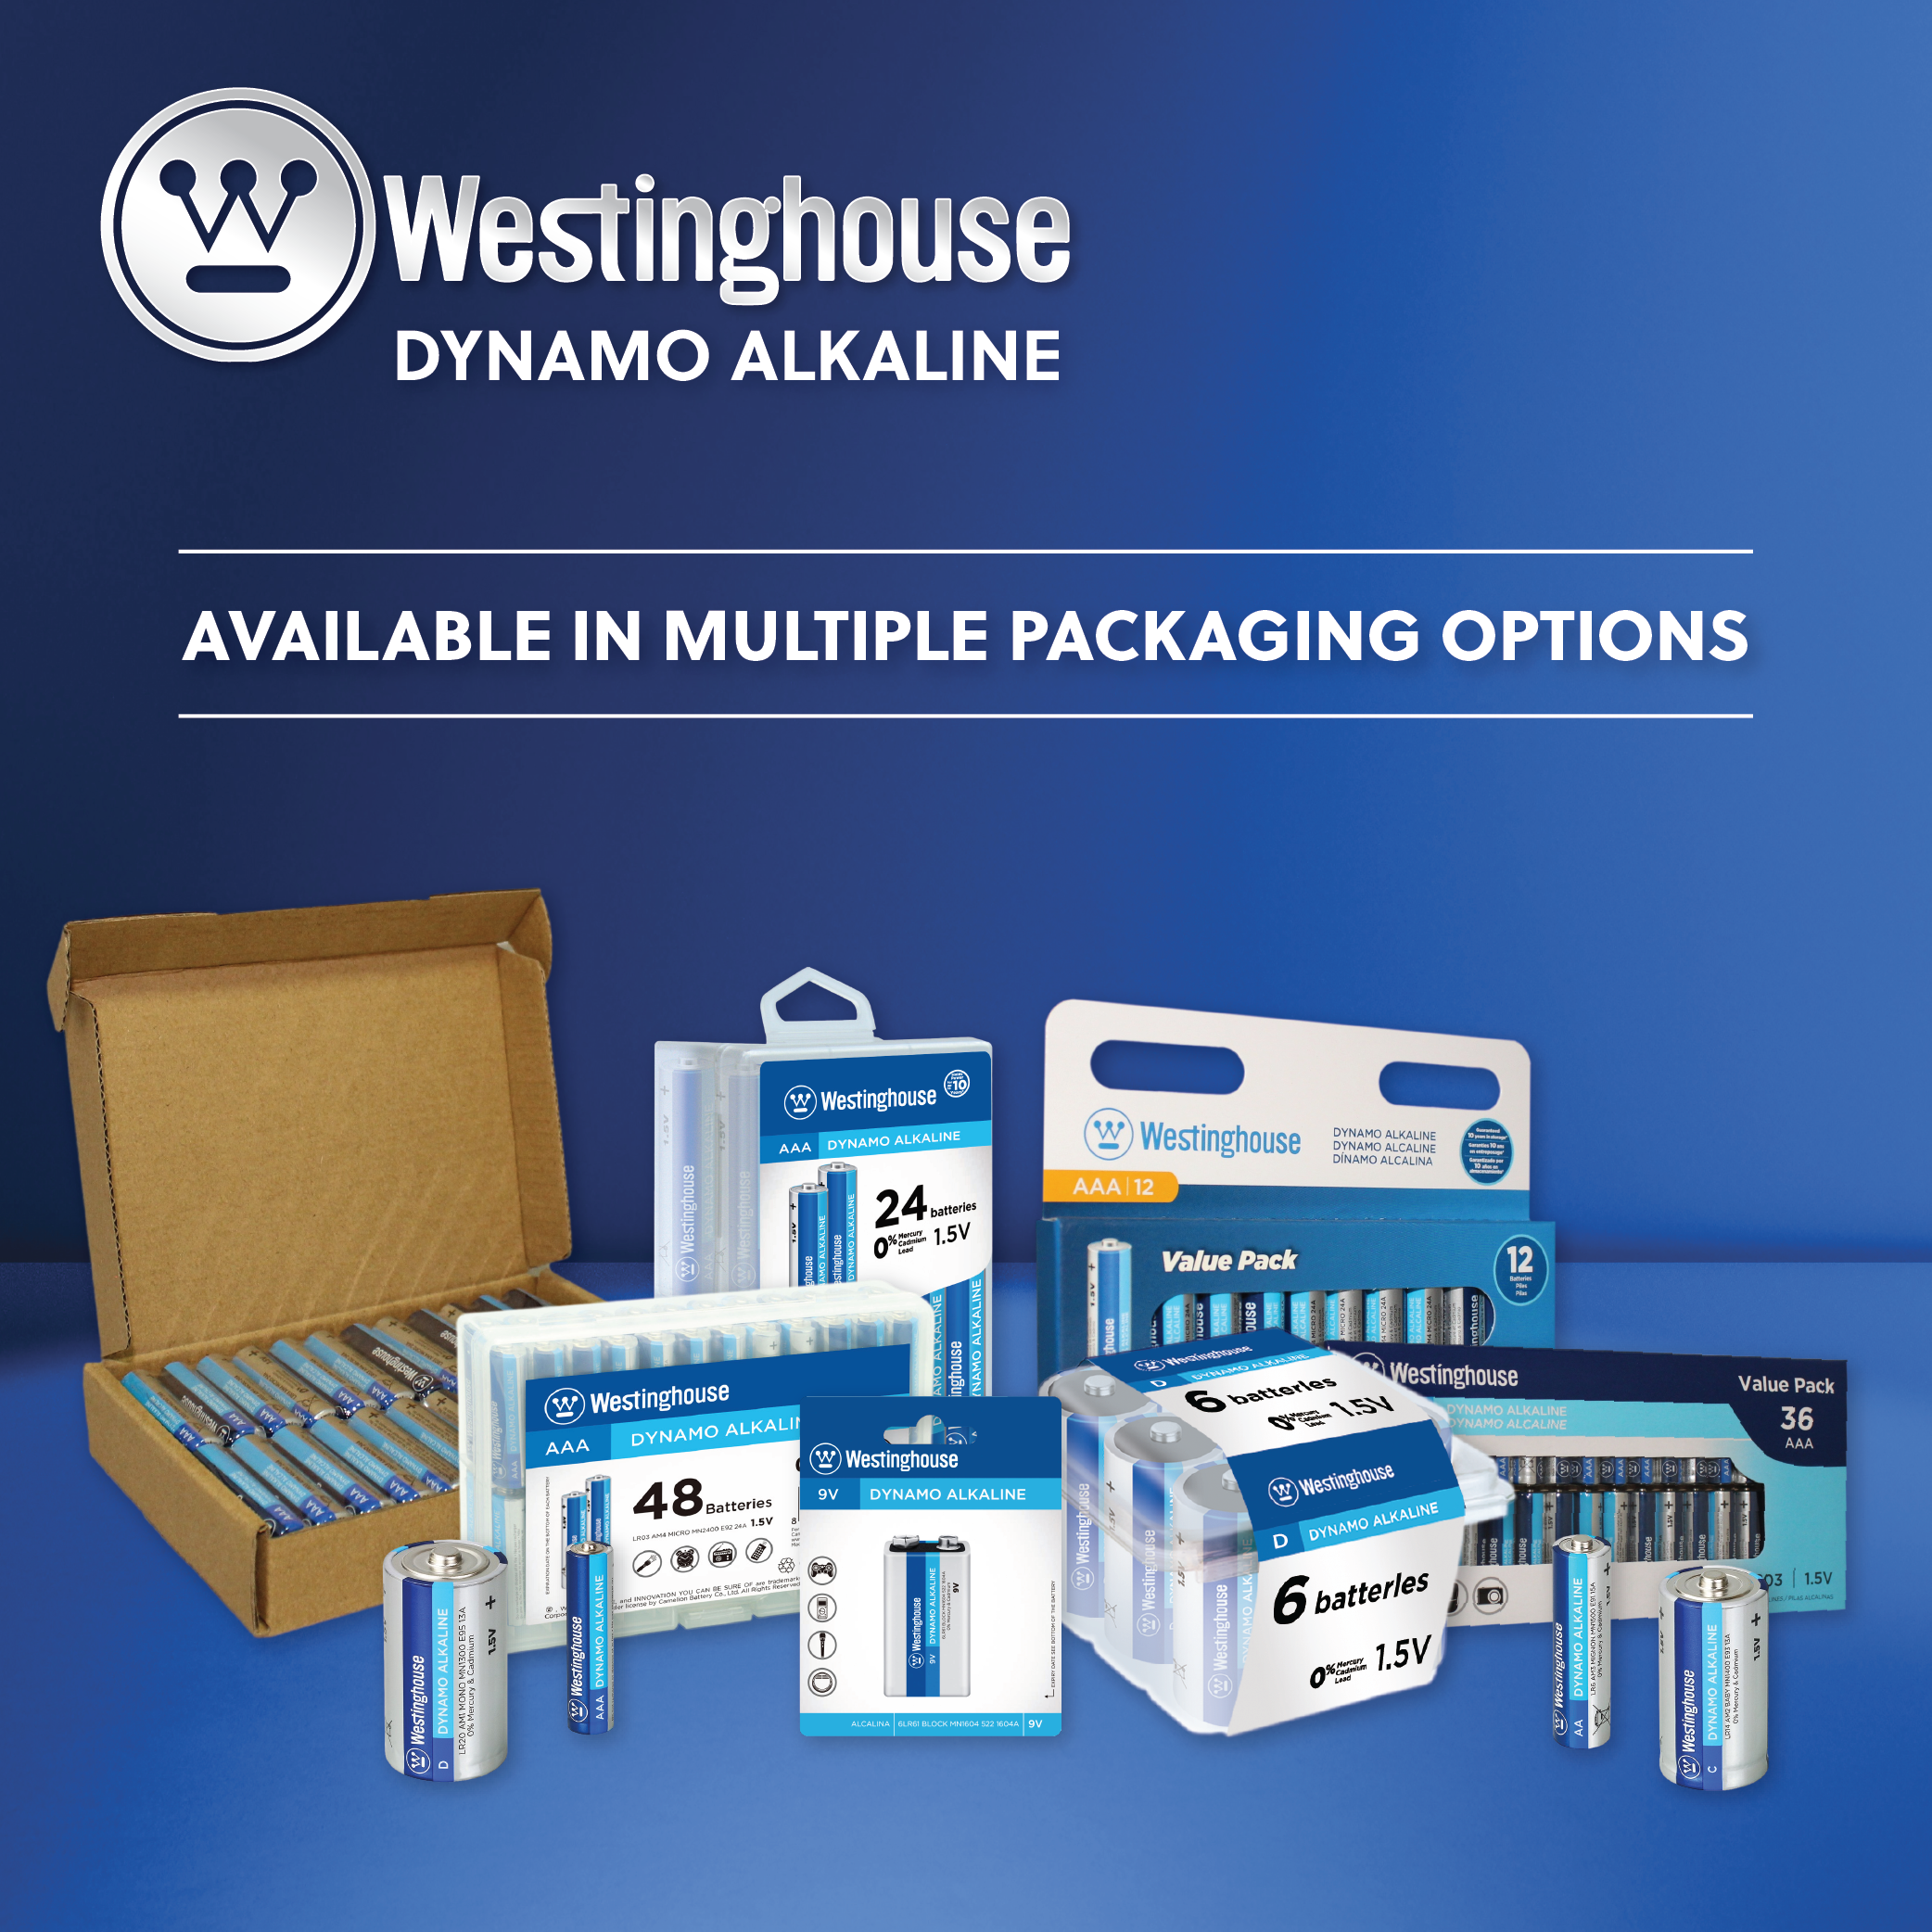 Westinghouse 9V Dynamo Alkaline